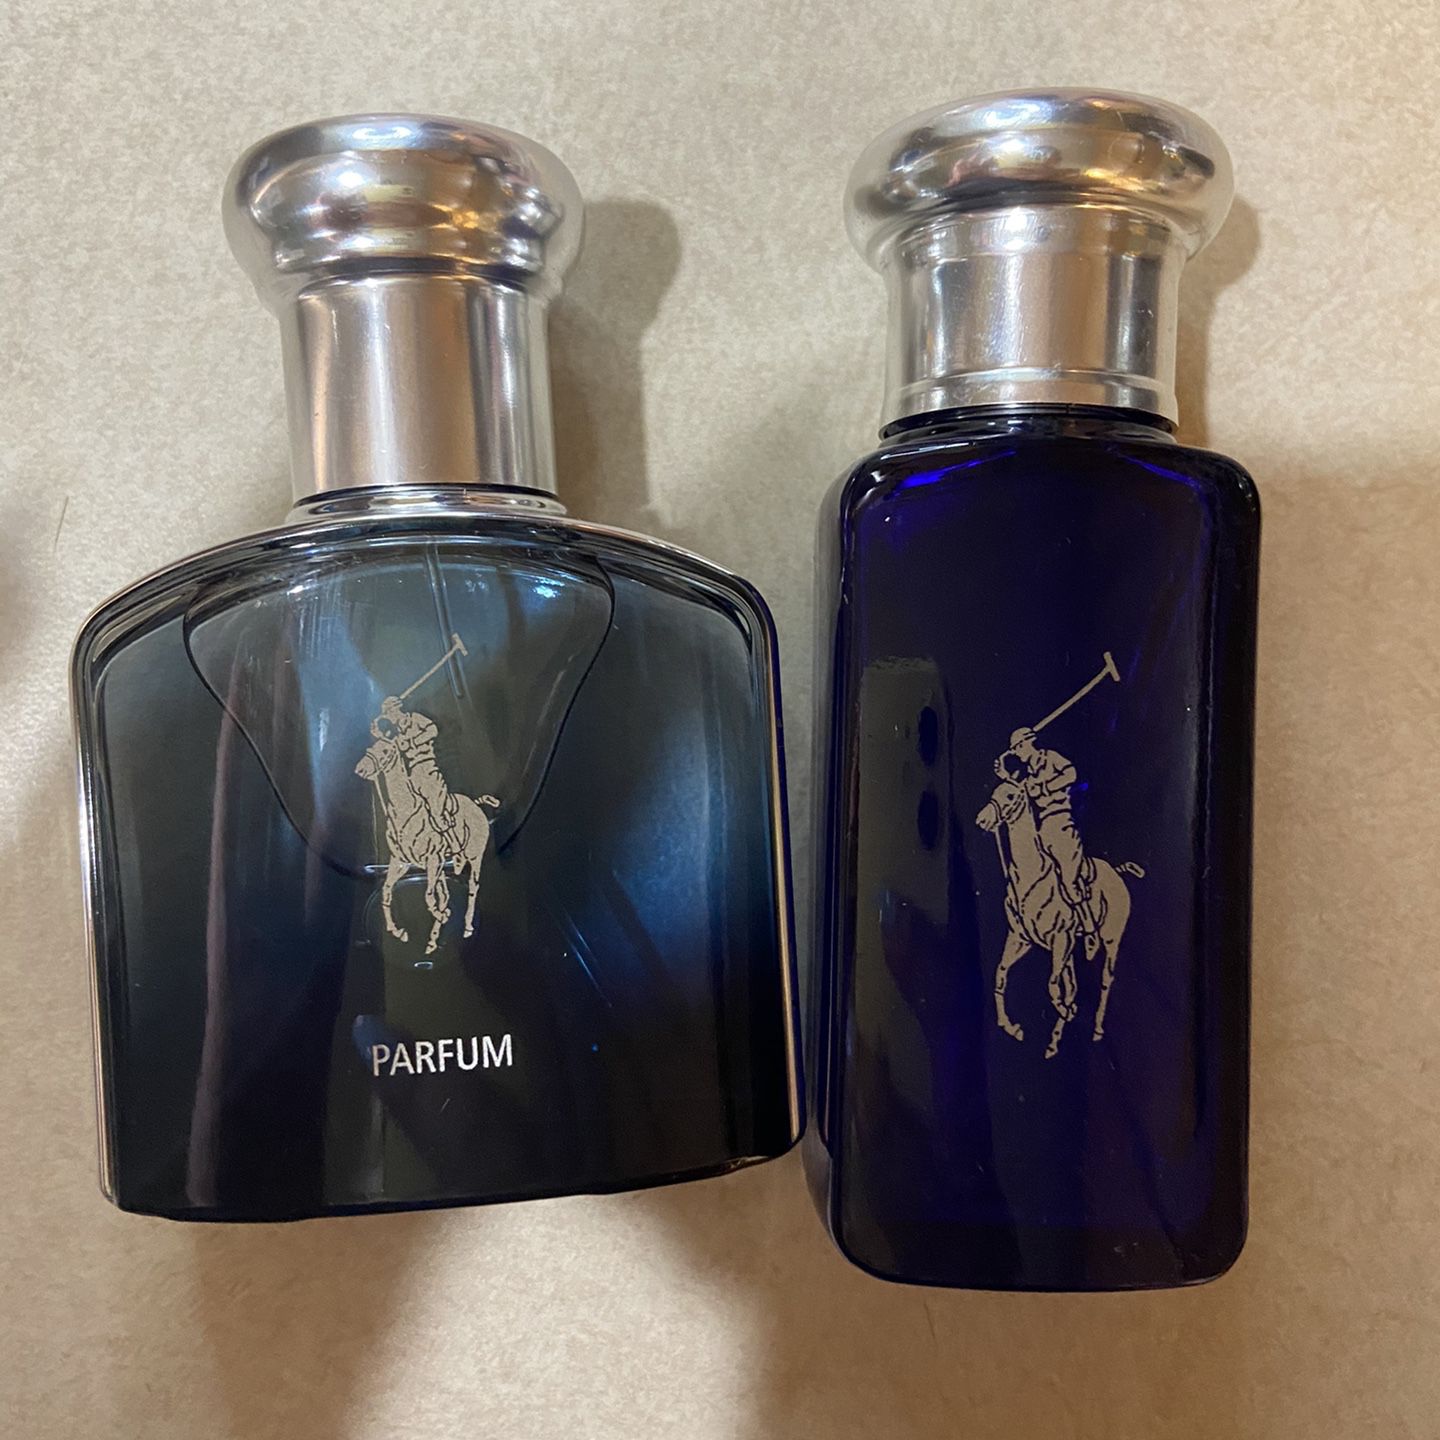 POLO BLUE FOR MEN BY RALPH LAUREN - EAU DE TOILETTE SPRAY – Fragrance Room